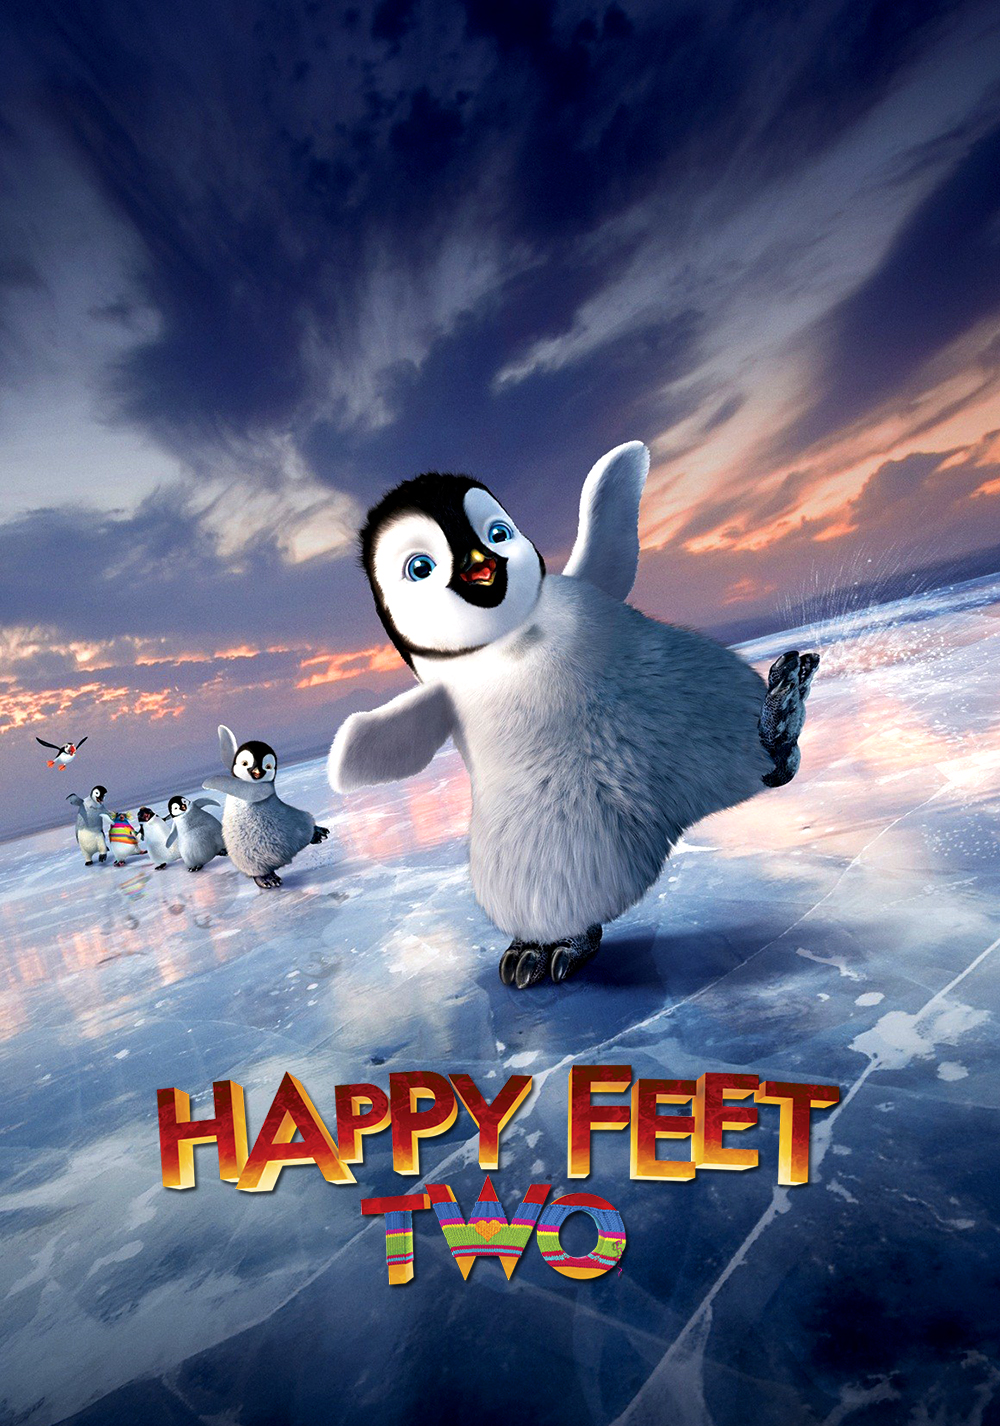 Happy Feet 2 Picture